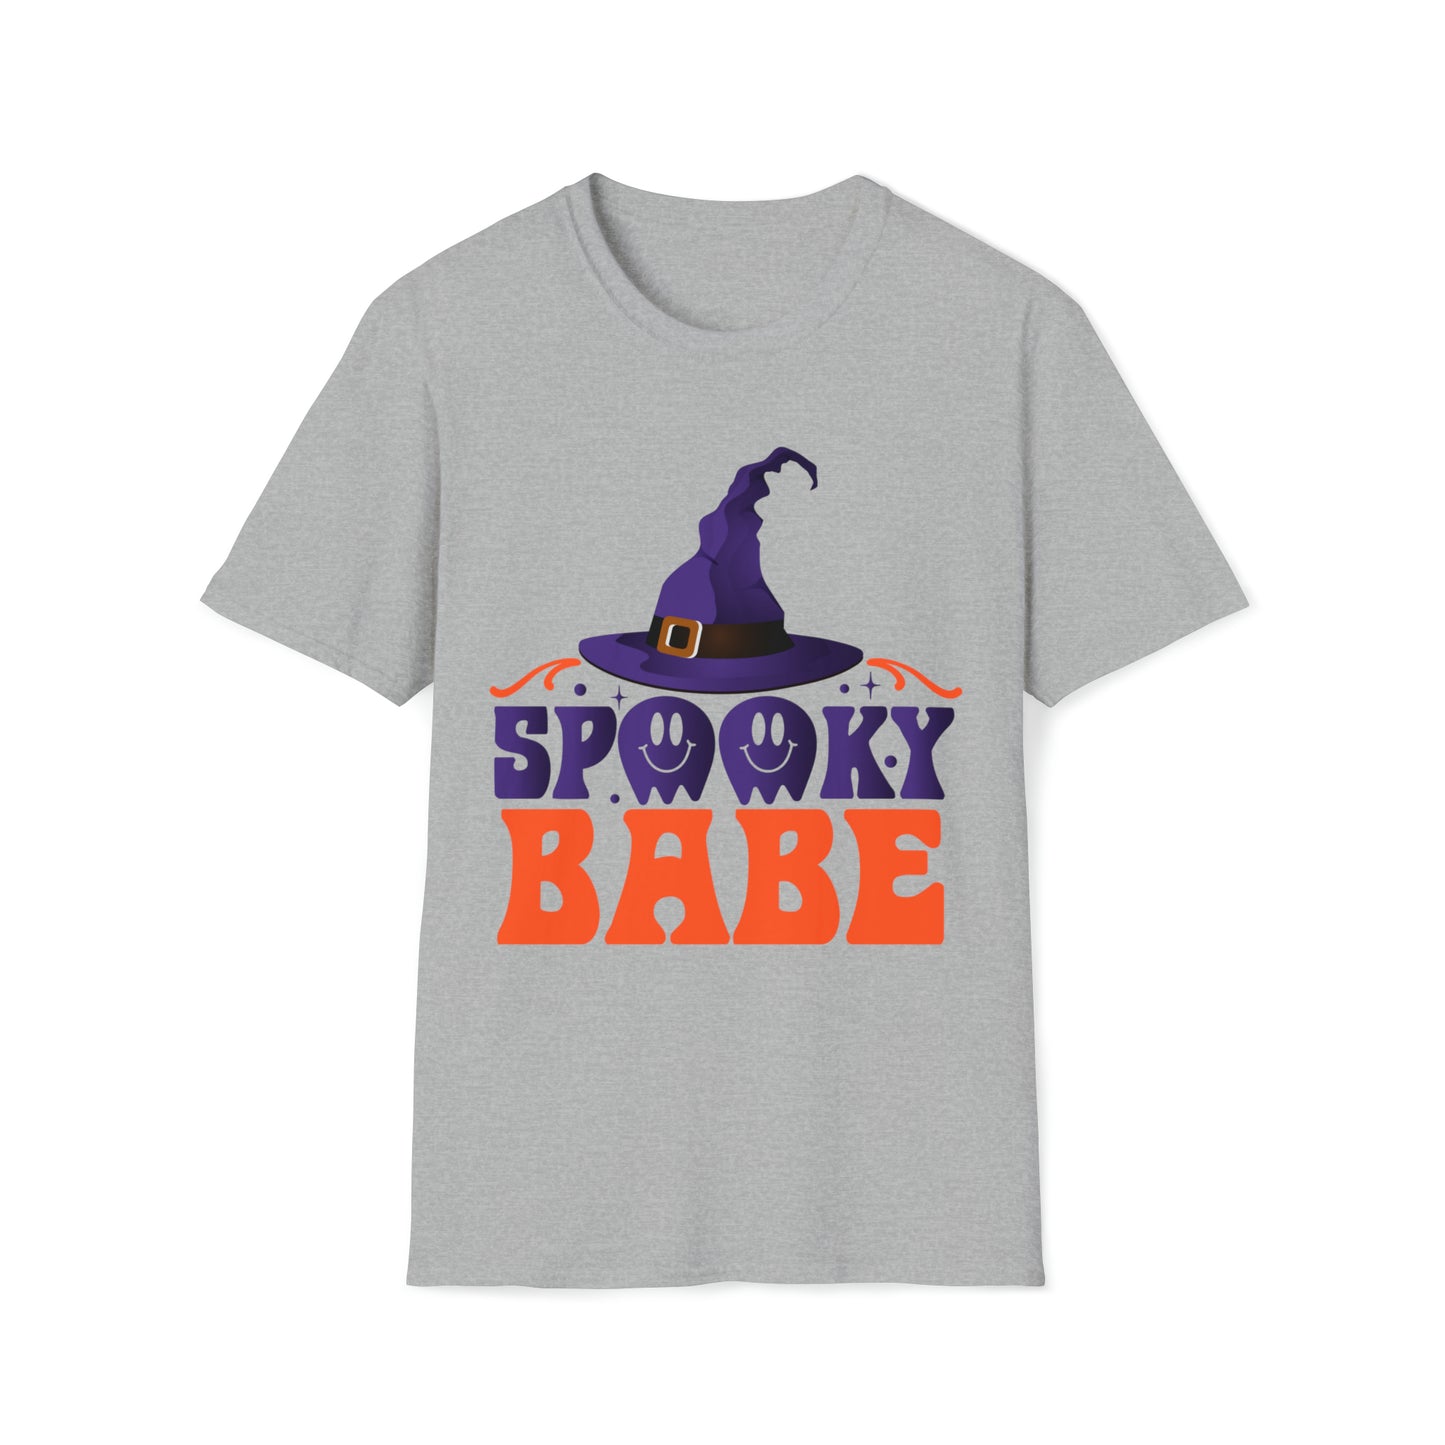 Spooky Babe - Unisex Softstyle T-Shirt